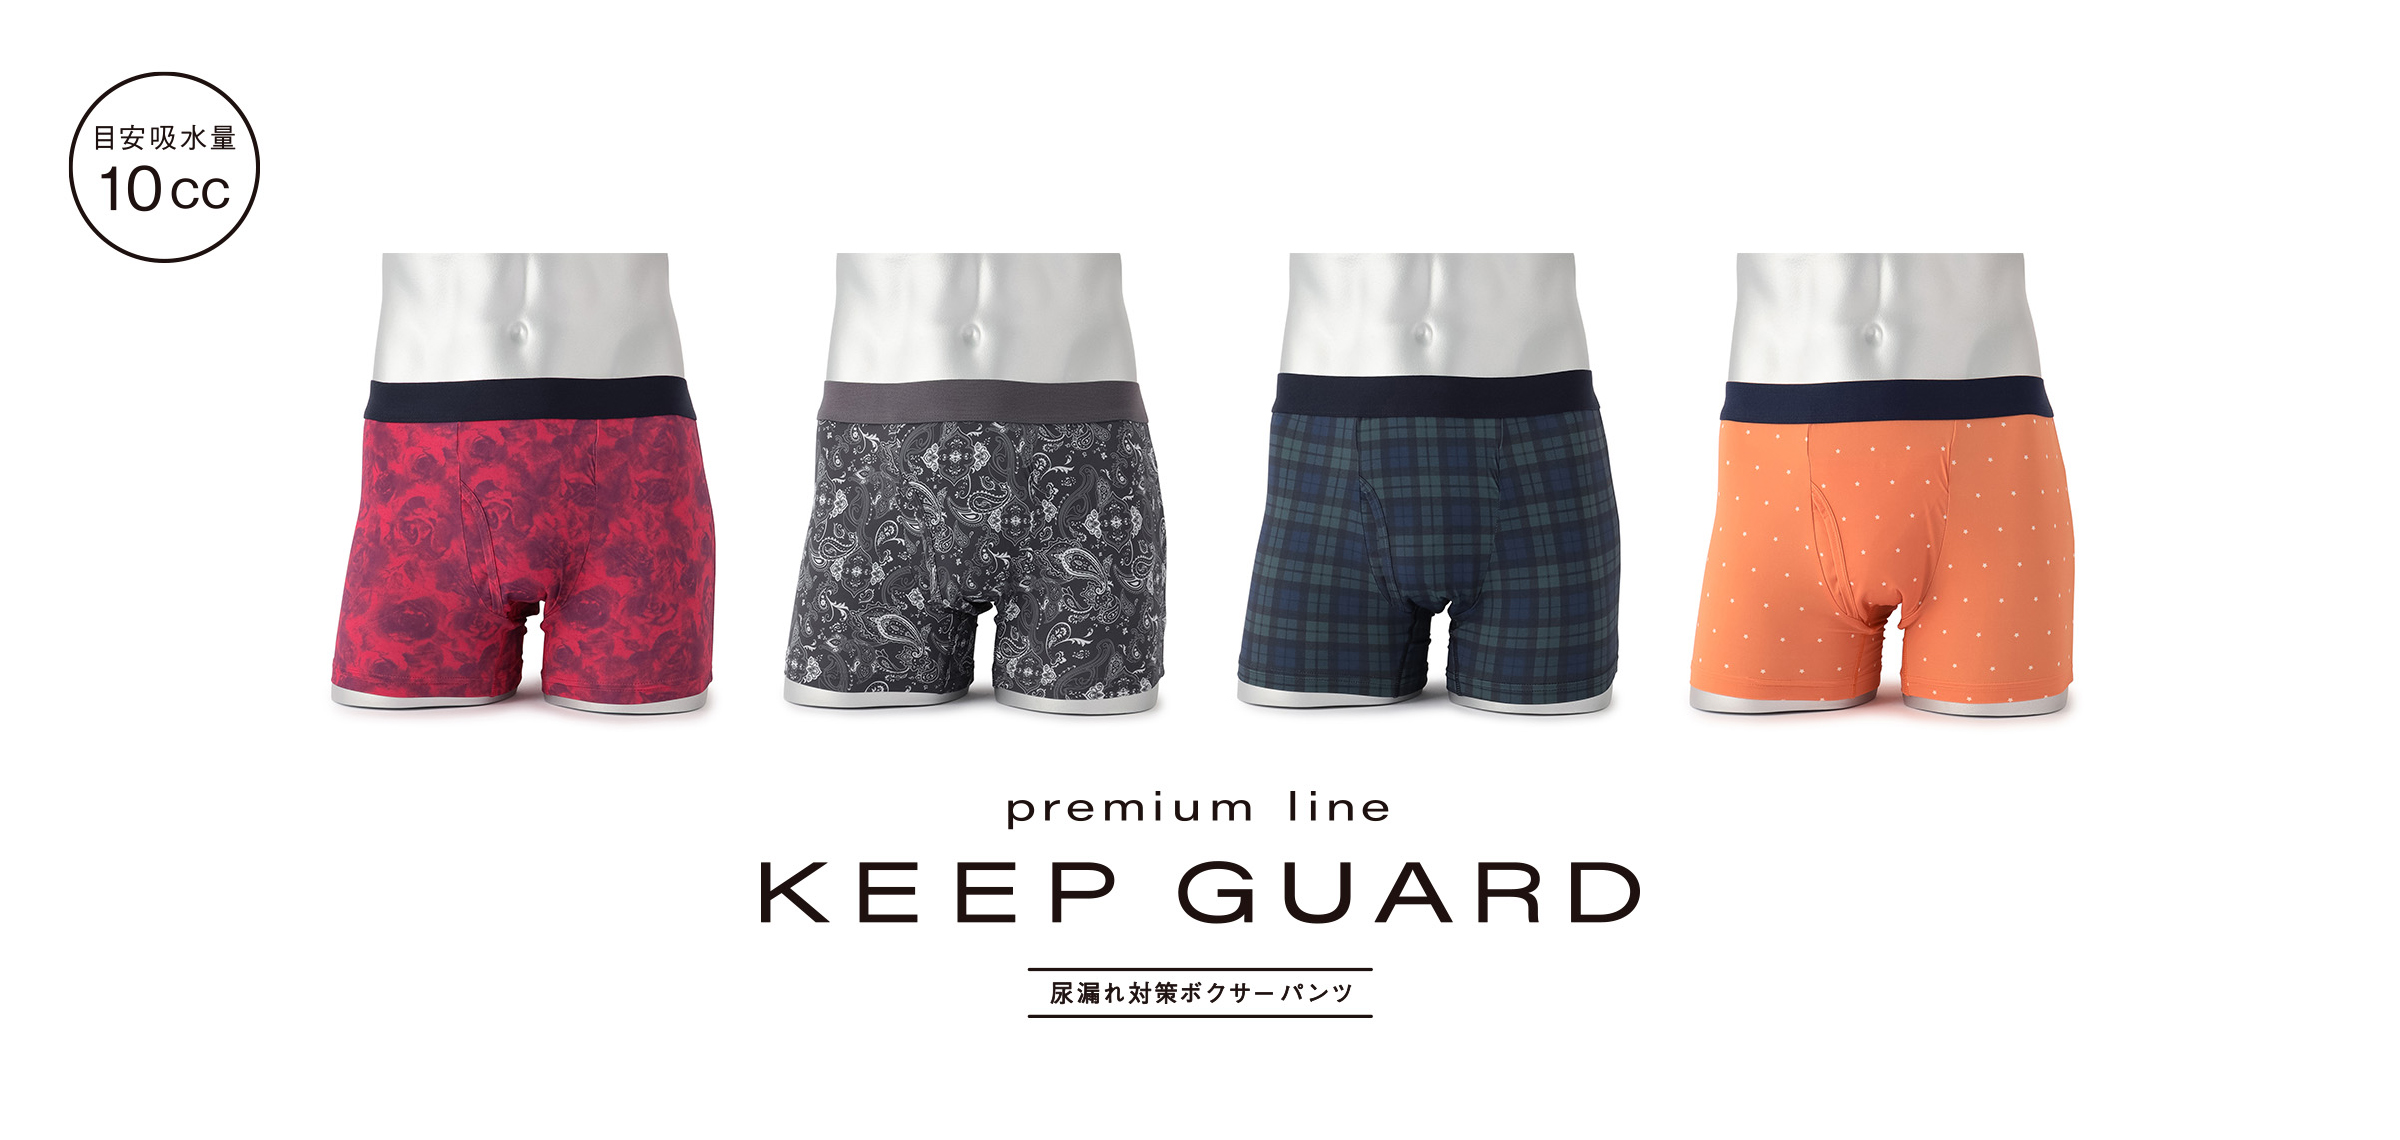 KEEP GUARD premium line(プレミアムライン)
            